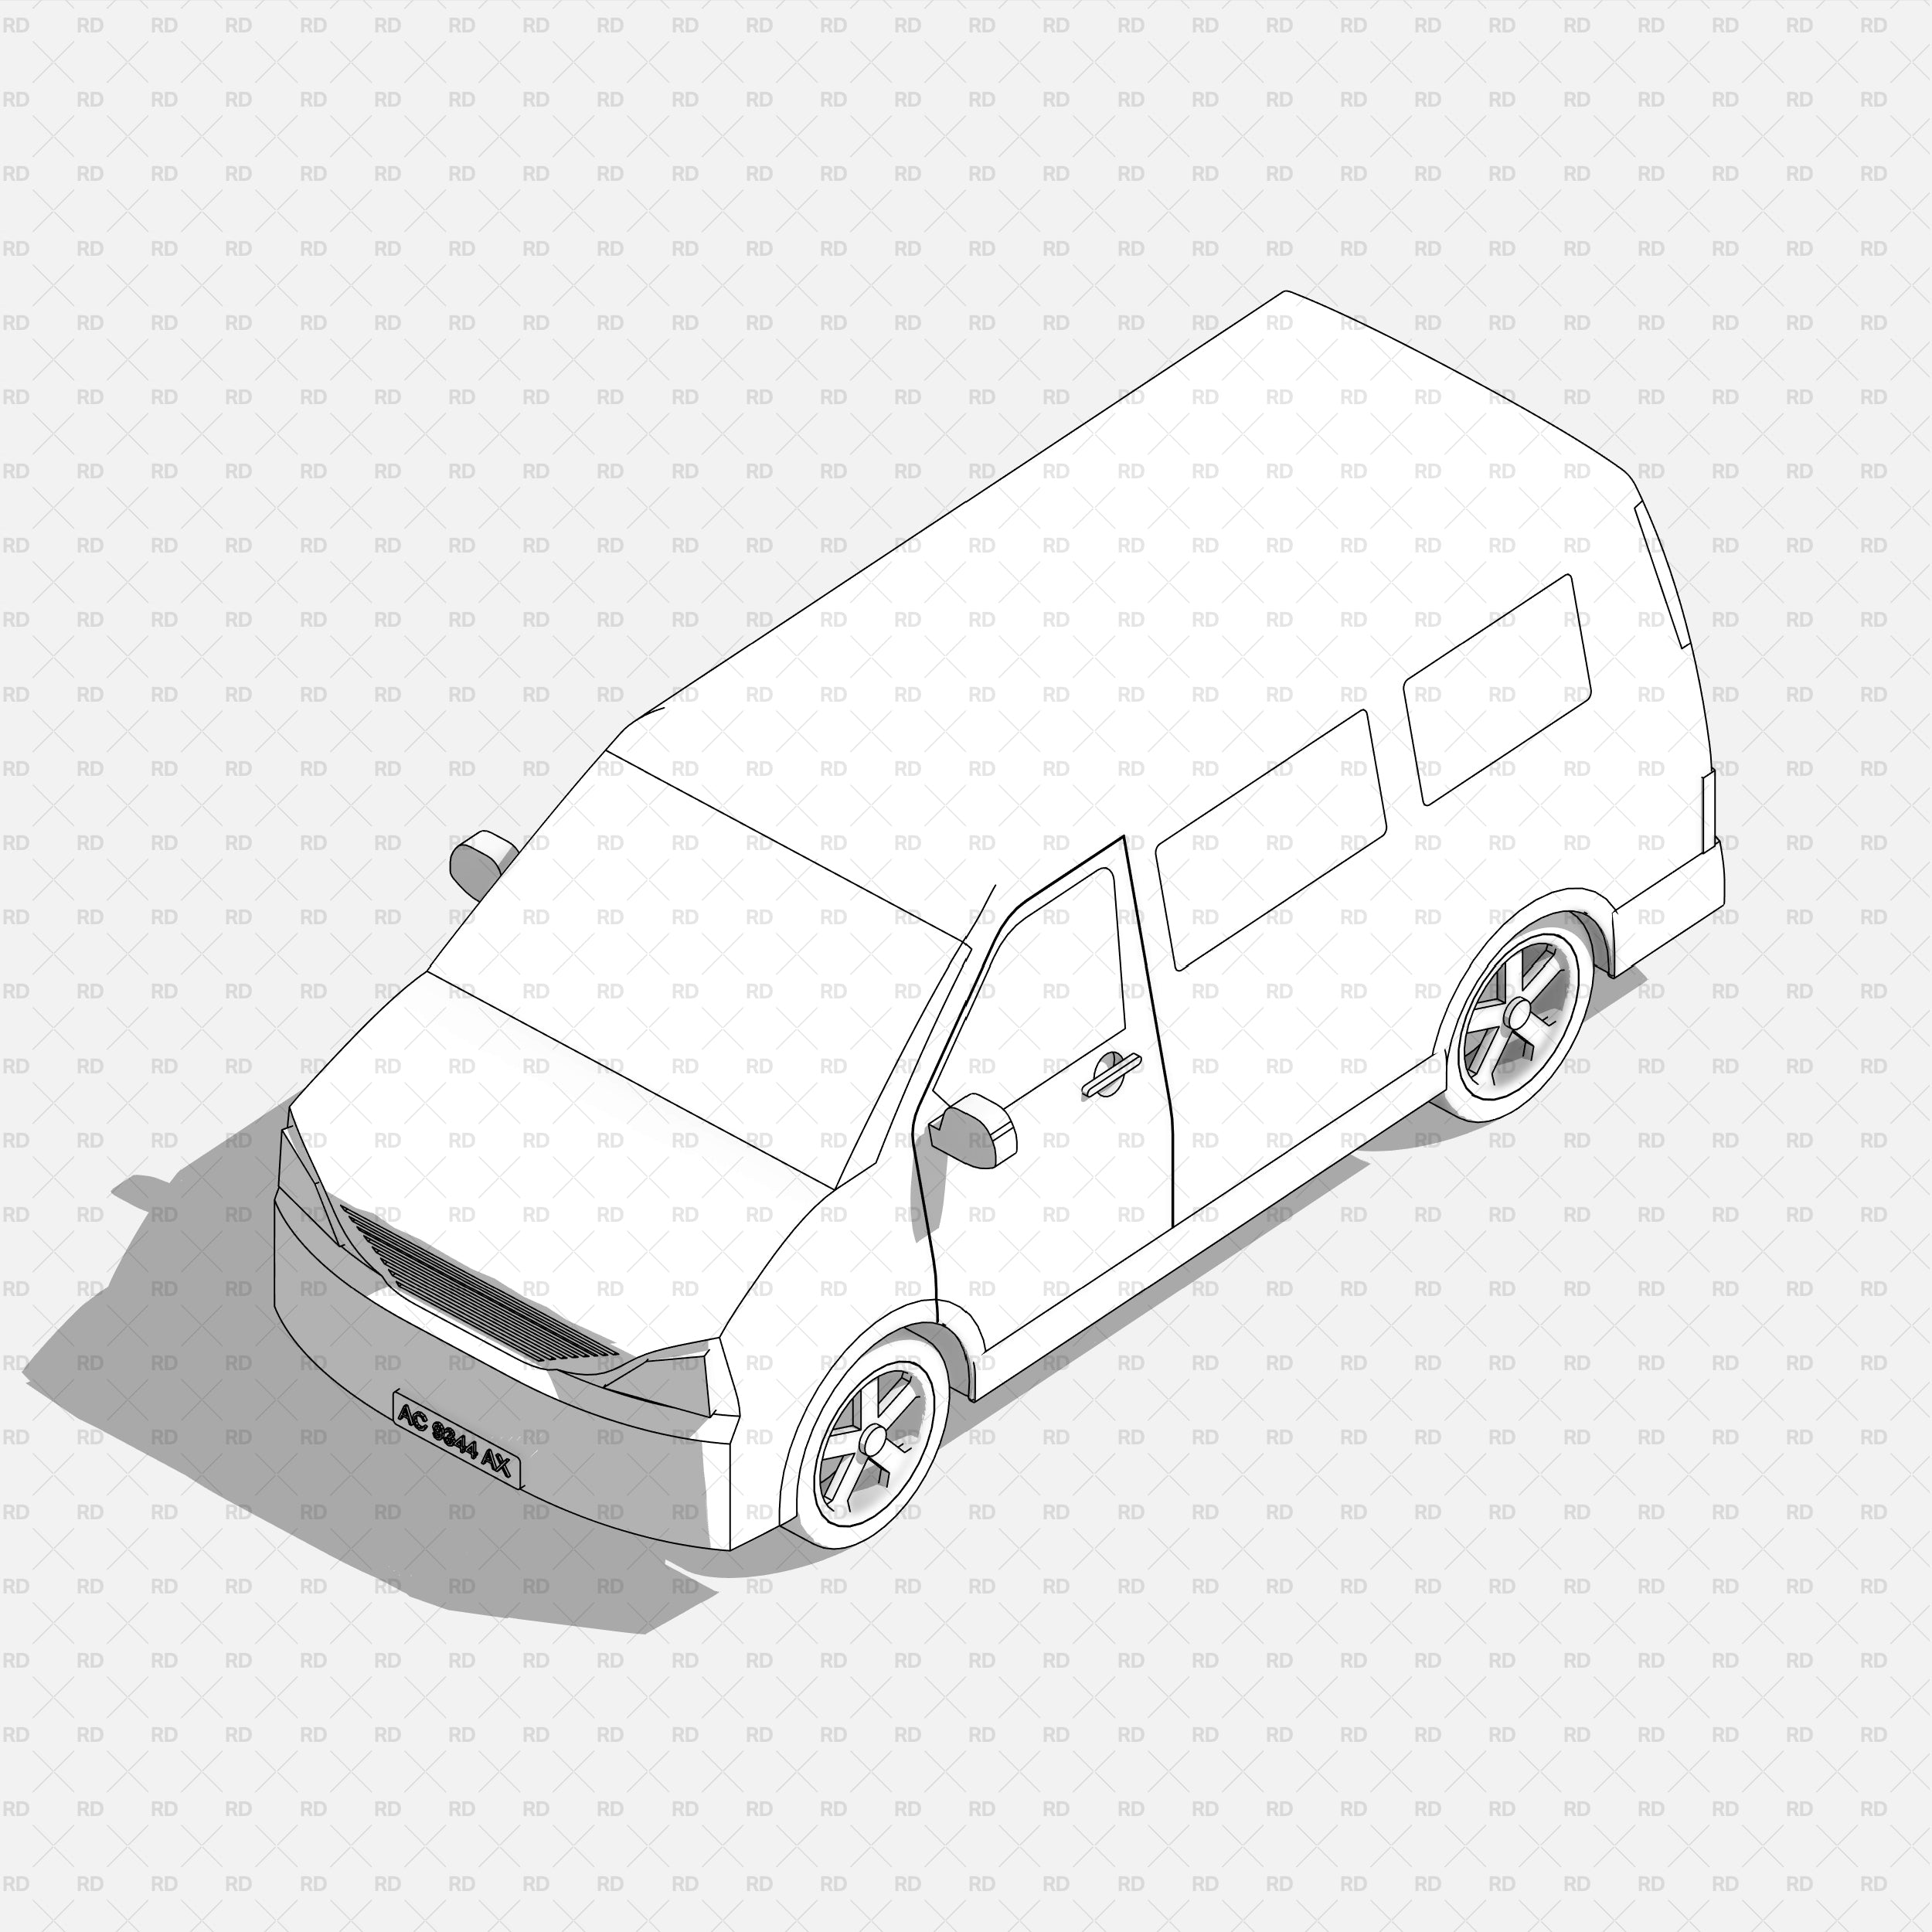 Revit Vehicle - Van